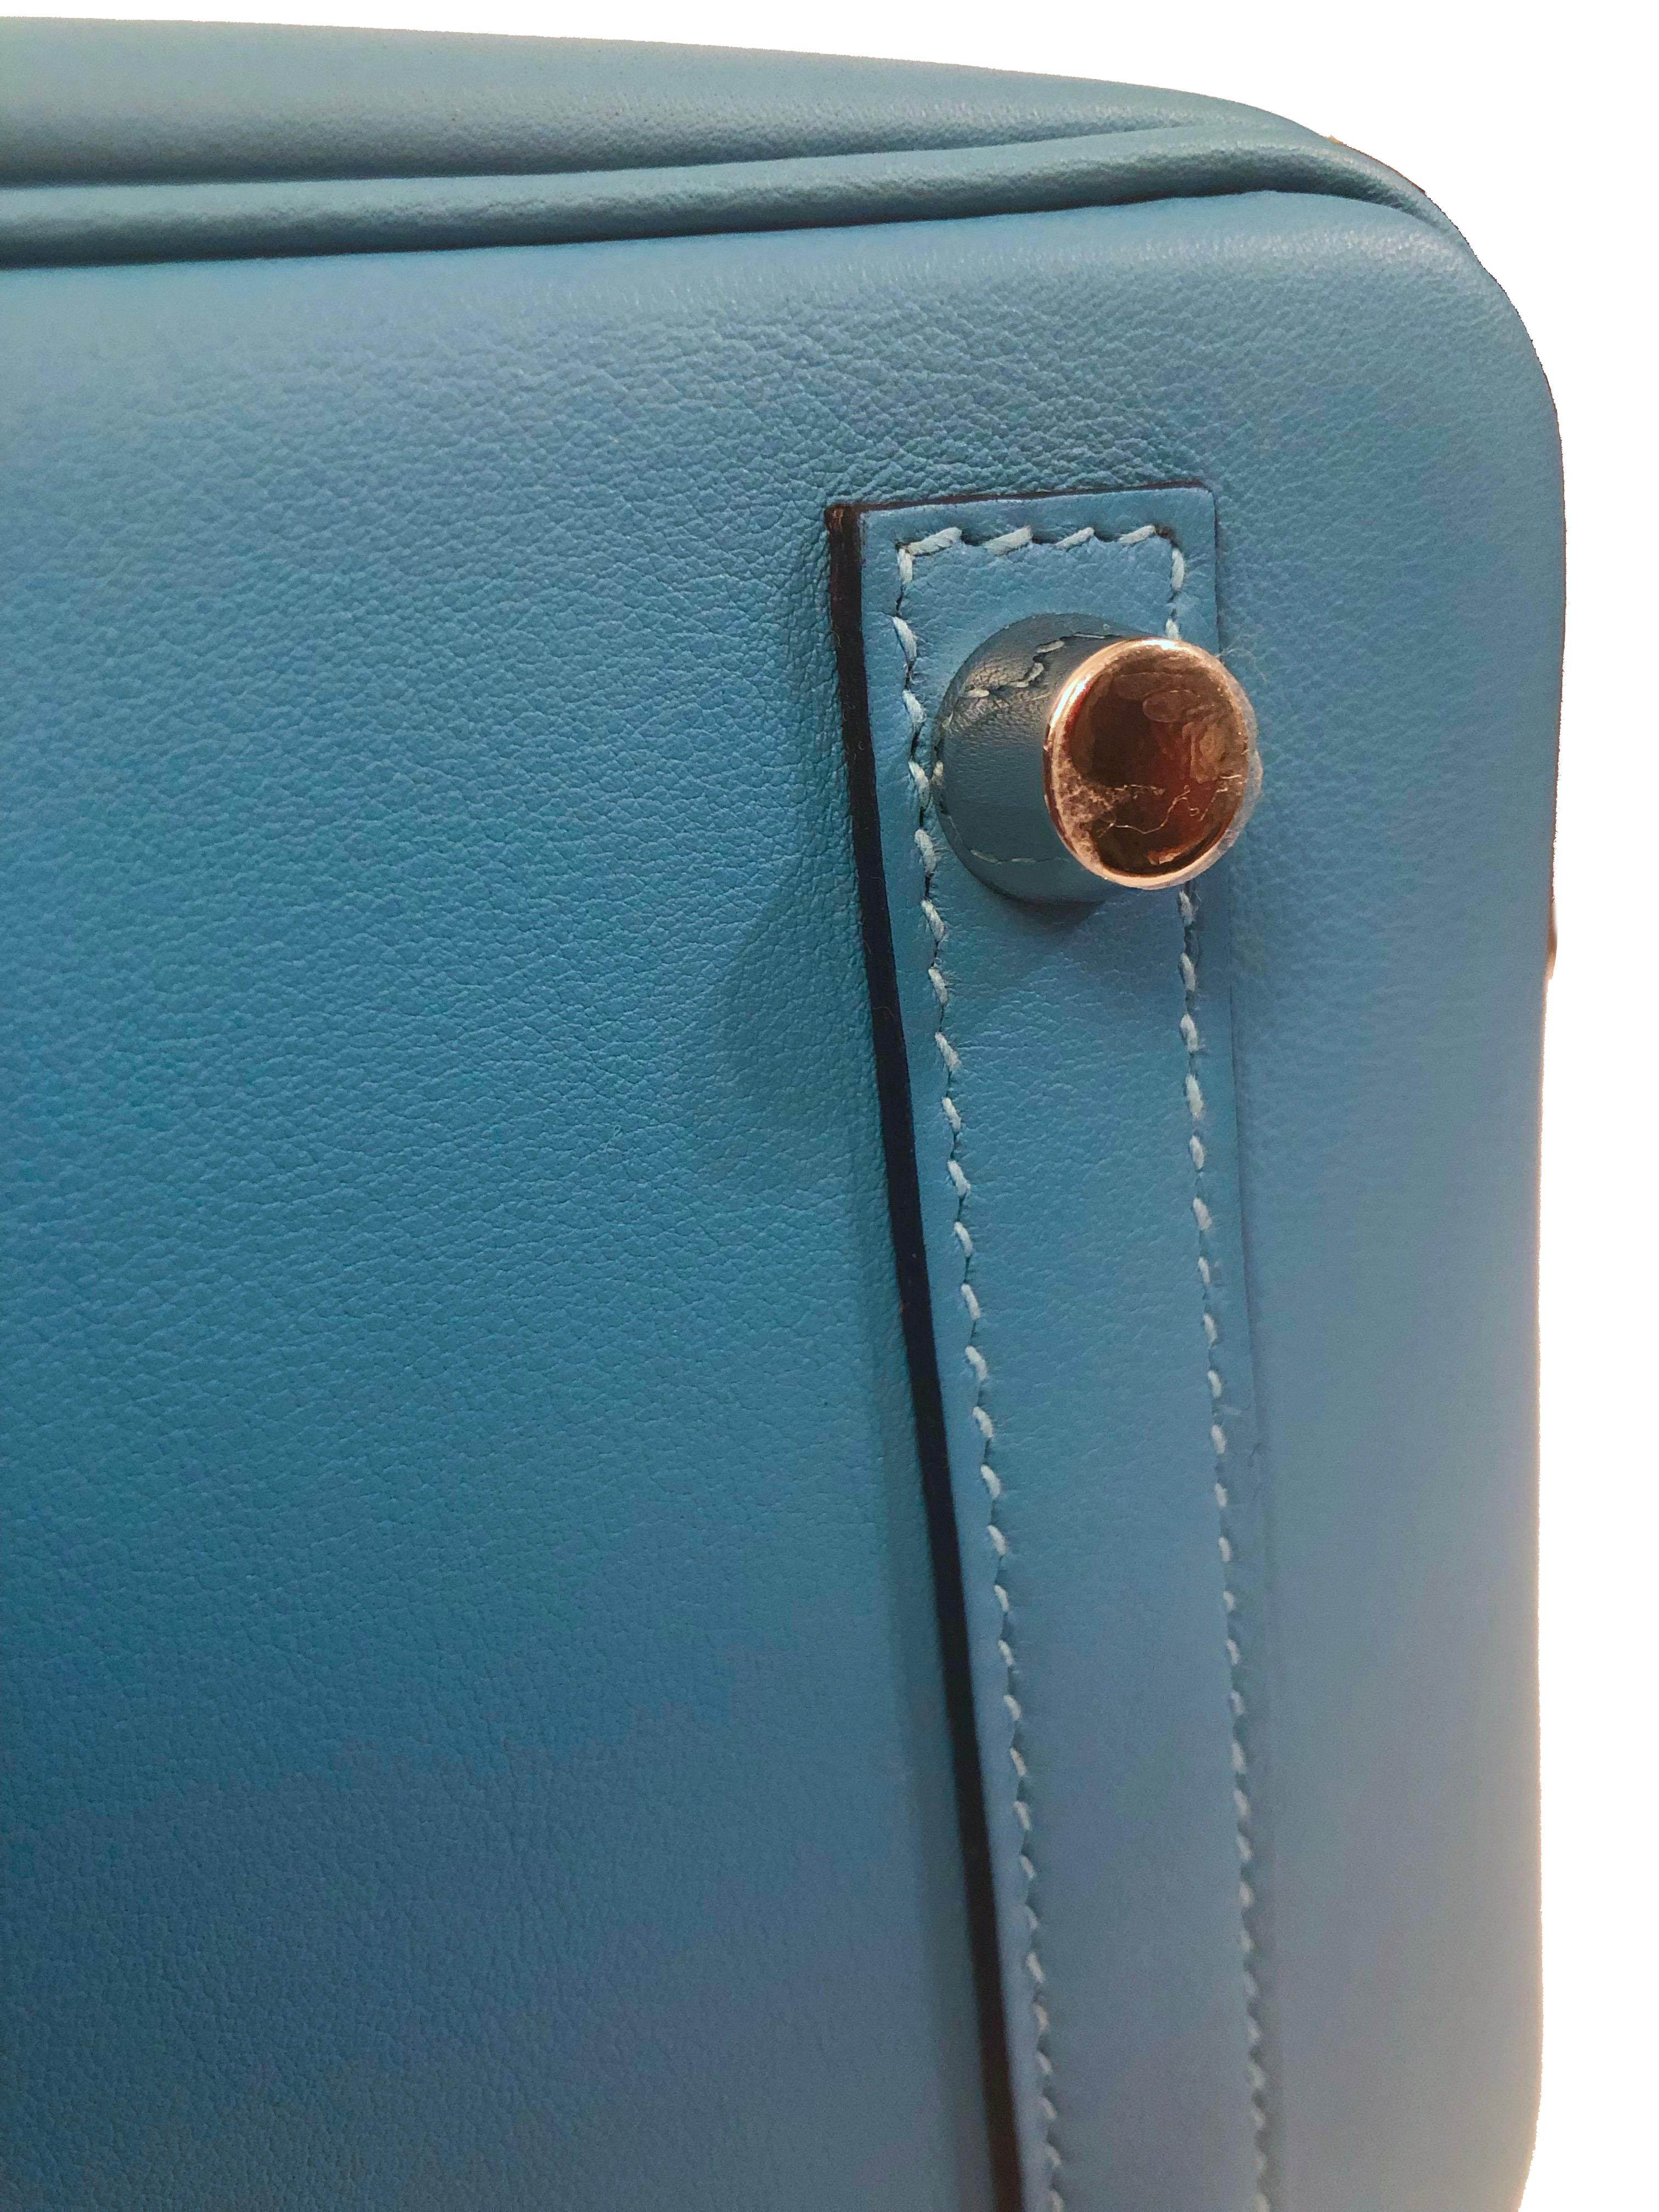 BRAND NEW Hermes  Bleu du Nord Swift leather 25 Birkin Bag  7